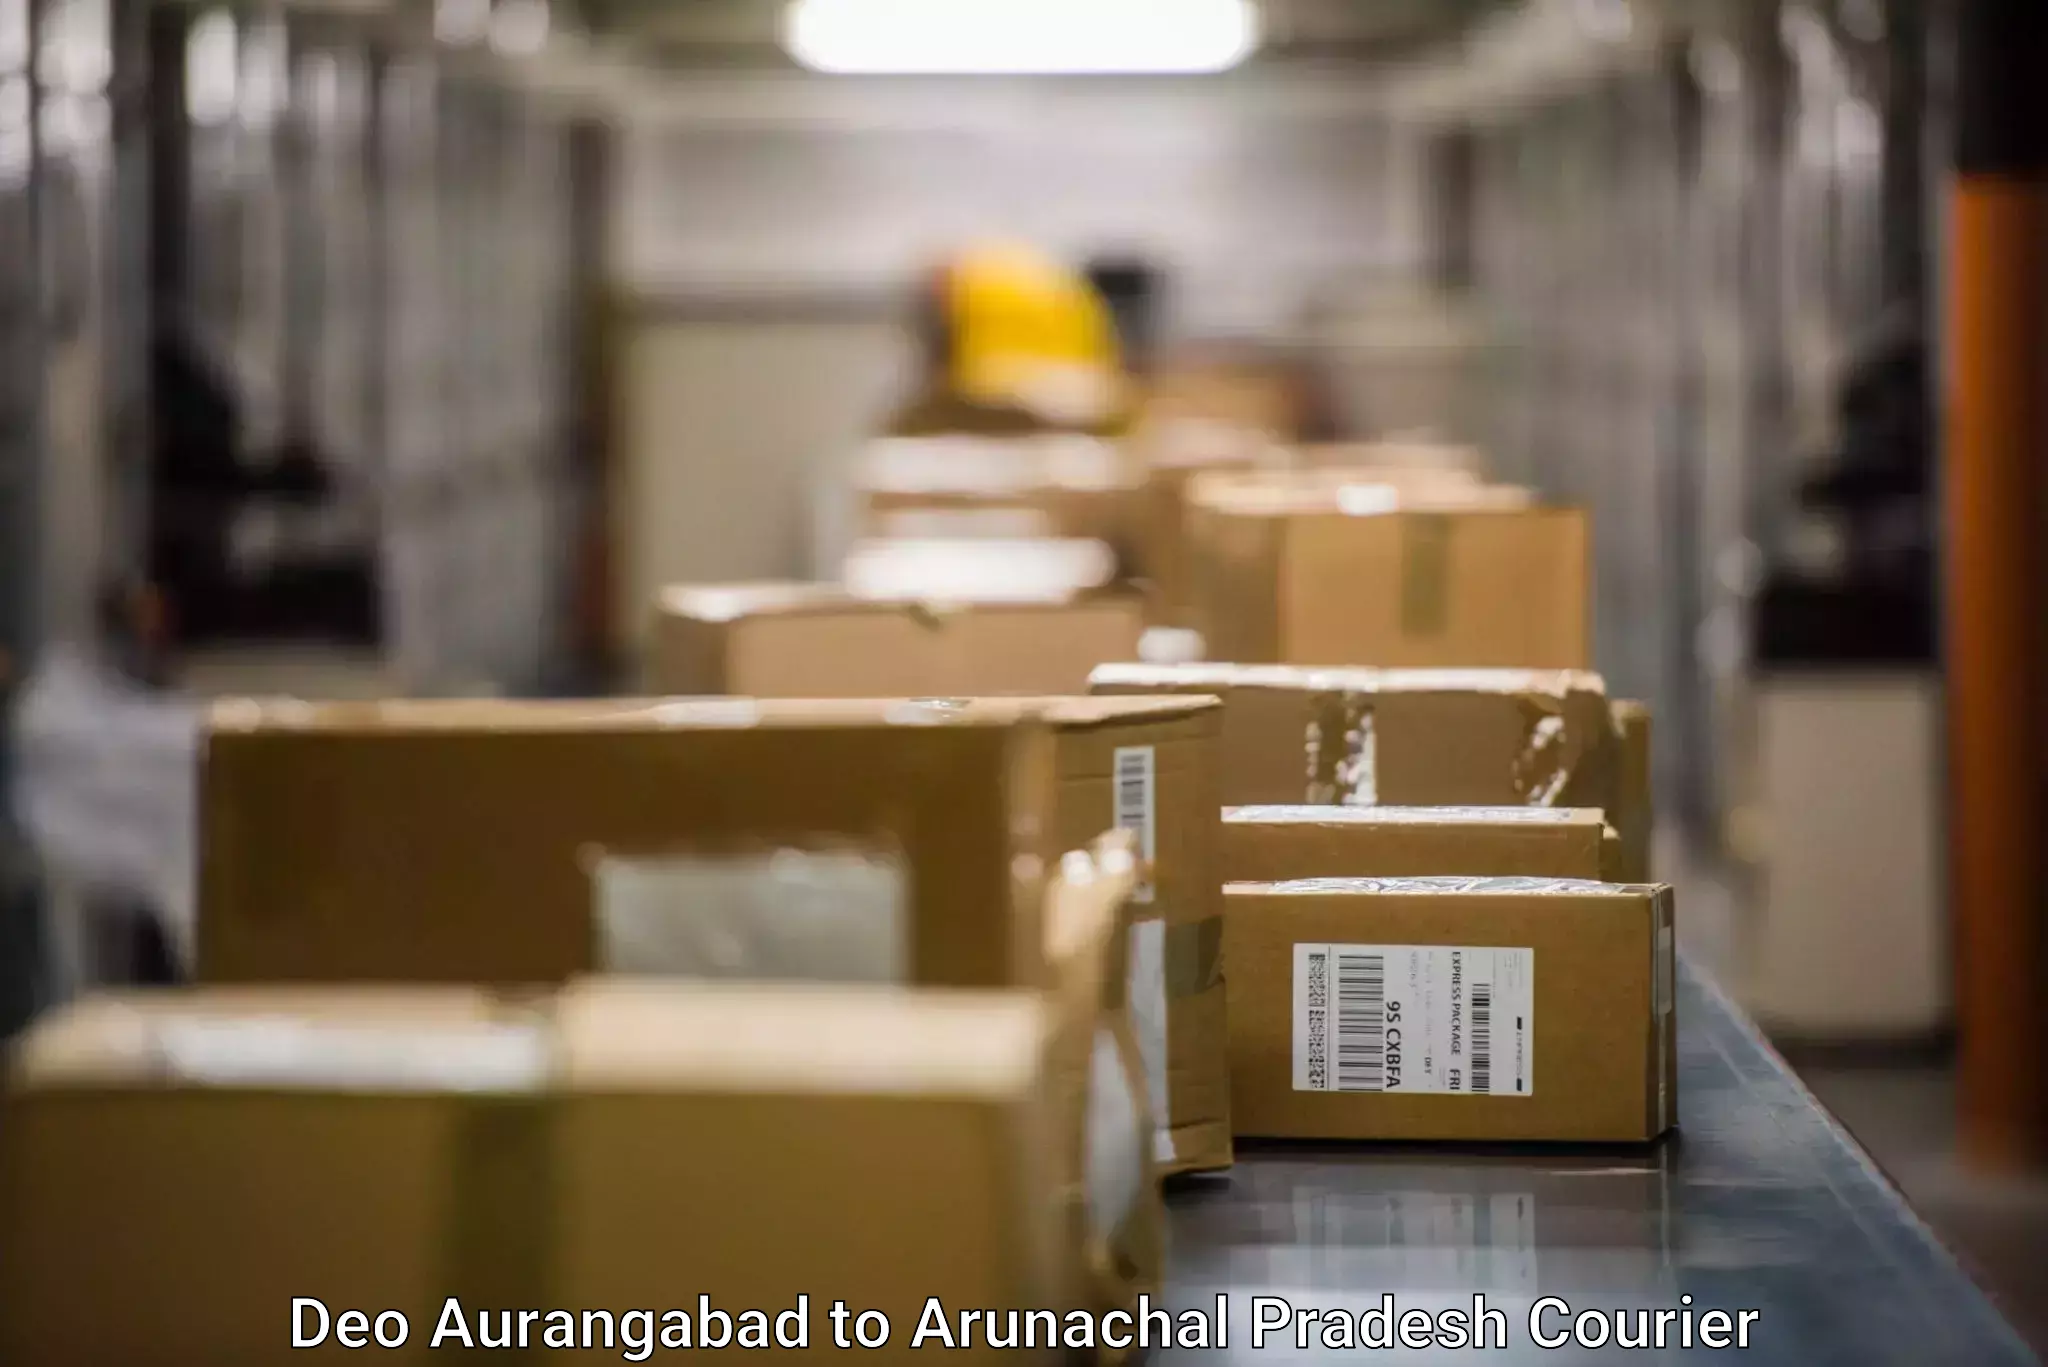 Premium courier solutions Deo Aurangabad to Pasighat